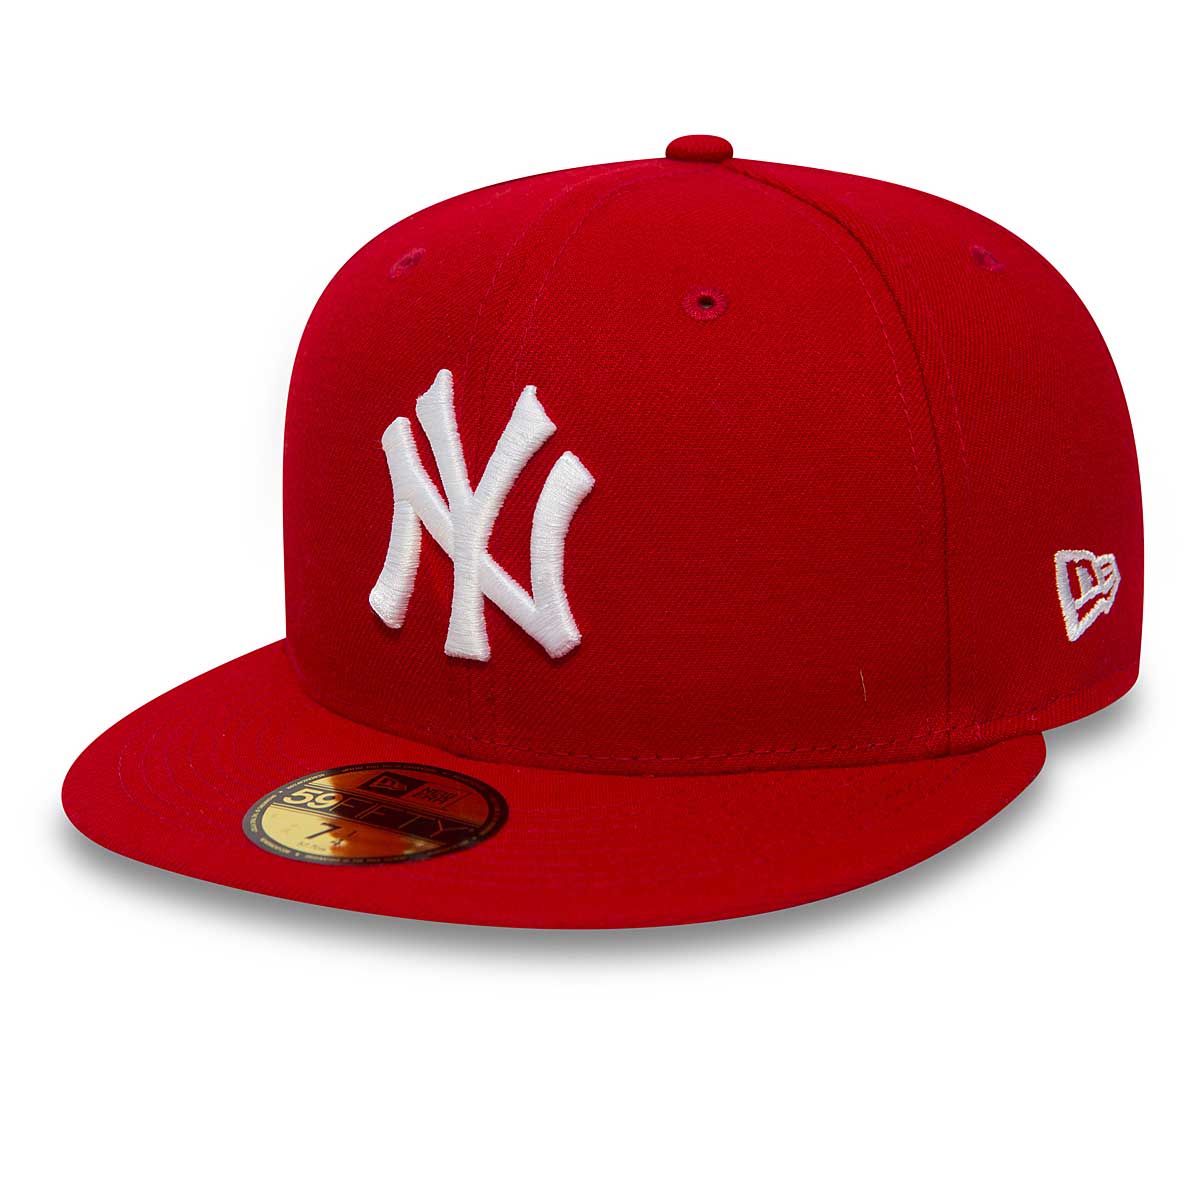 Vermelden extract Victor Buy MLB NEW YORK YANKEES BASIC 59FIFTY CAP for EUR 35.95 on KICKZ.com!